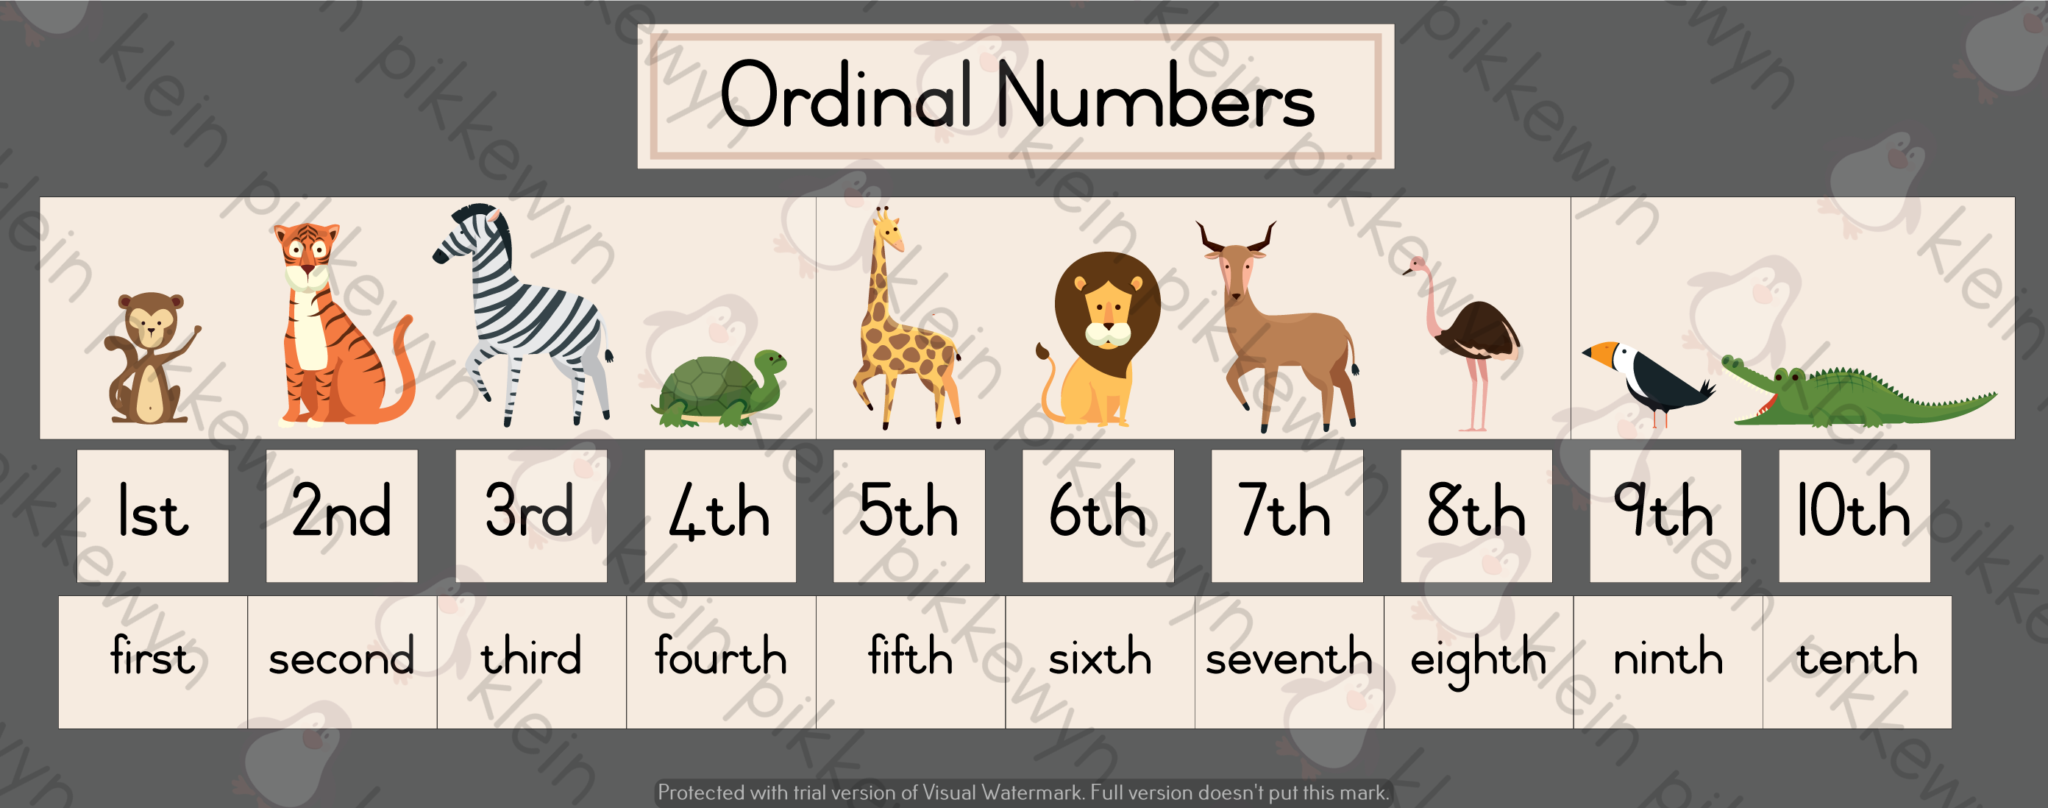 ordinal-numbers-activity-for-grade-2-1-10-ordinal-numbers-in-spanish-numbersworksheetcom